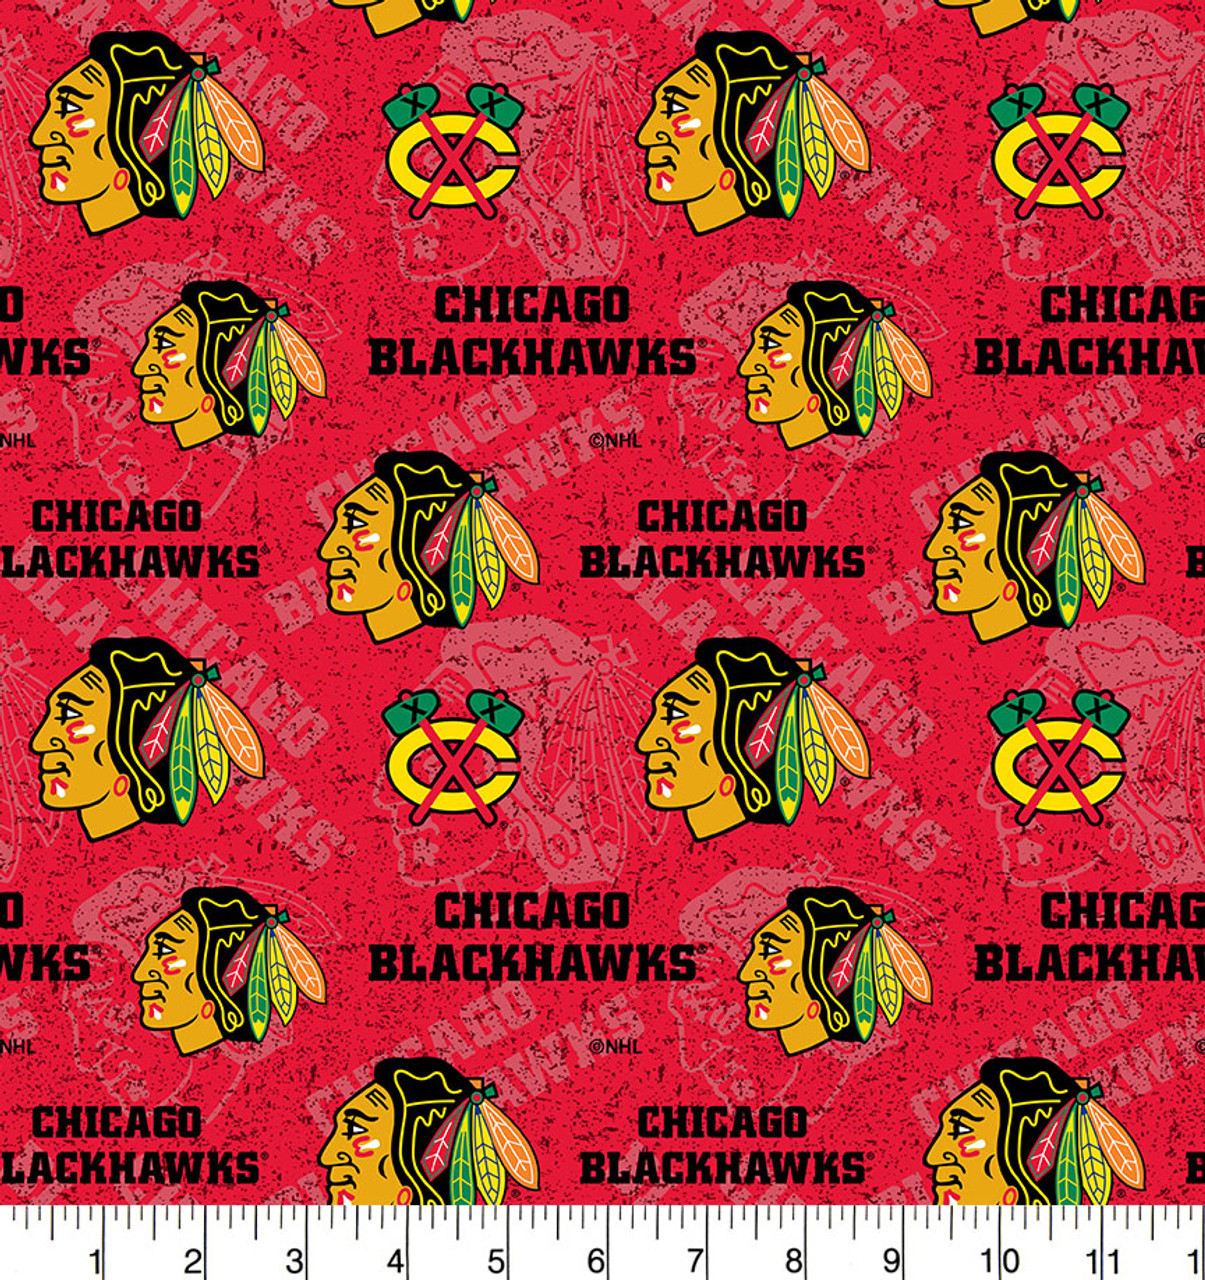 NHL - Chicago Blackhawks Logo Stencil